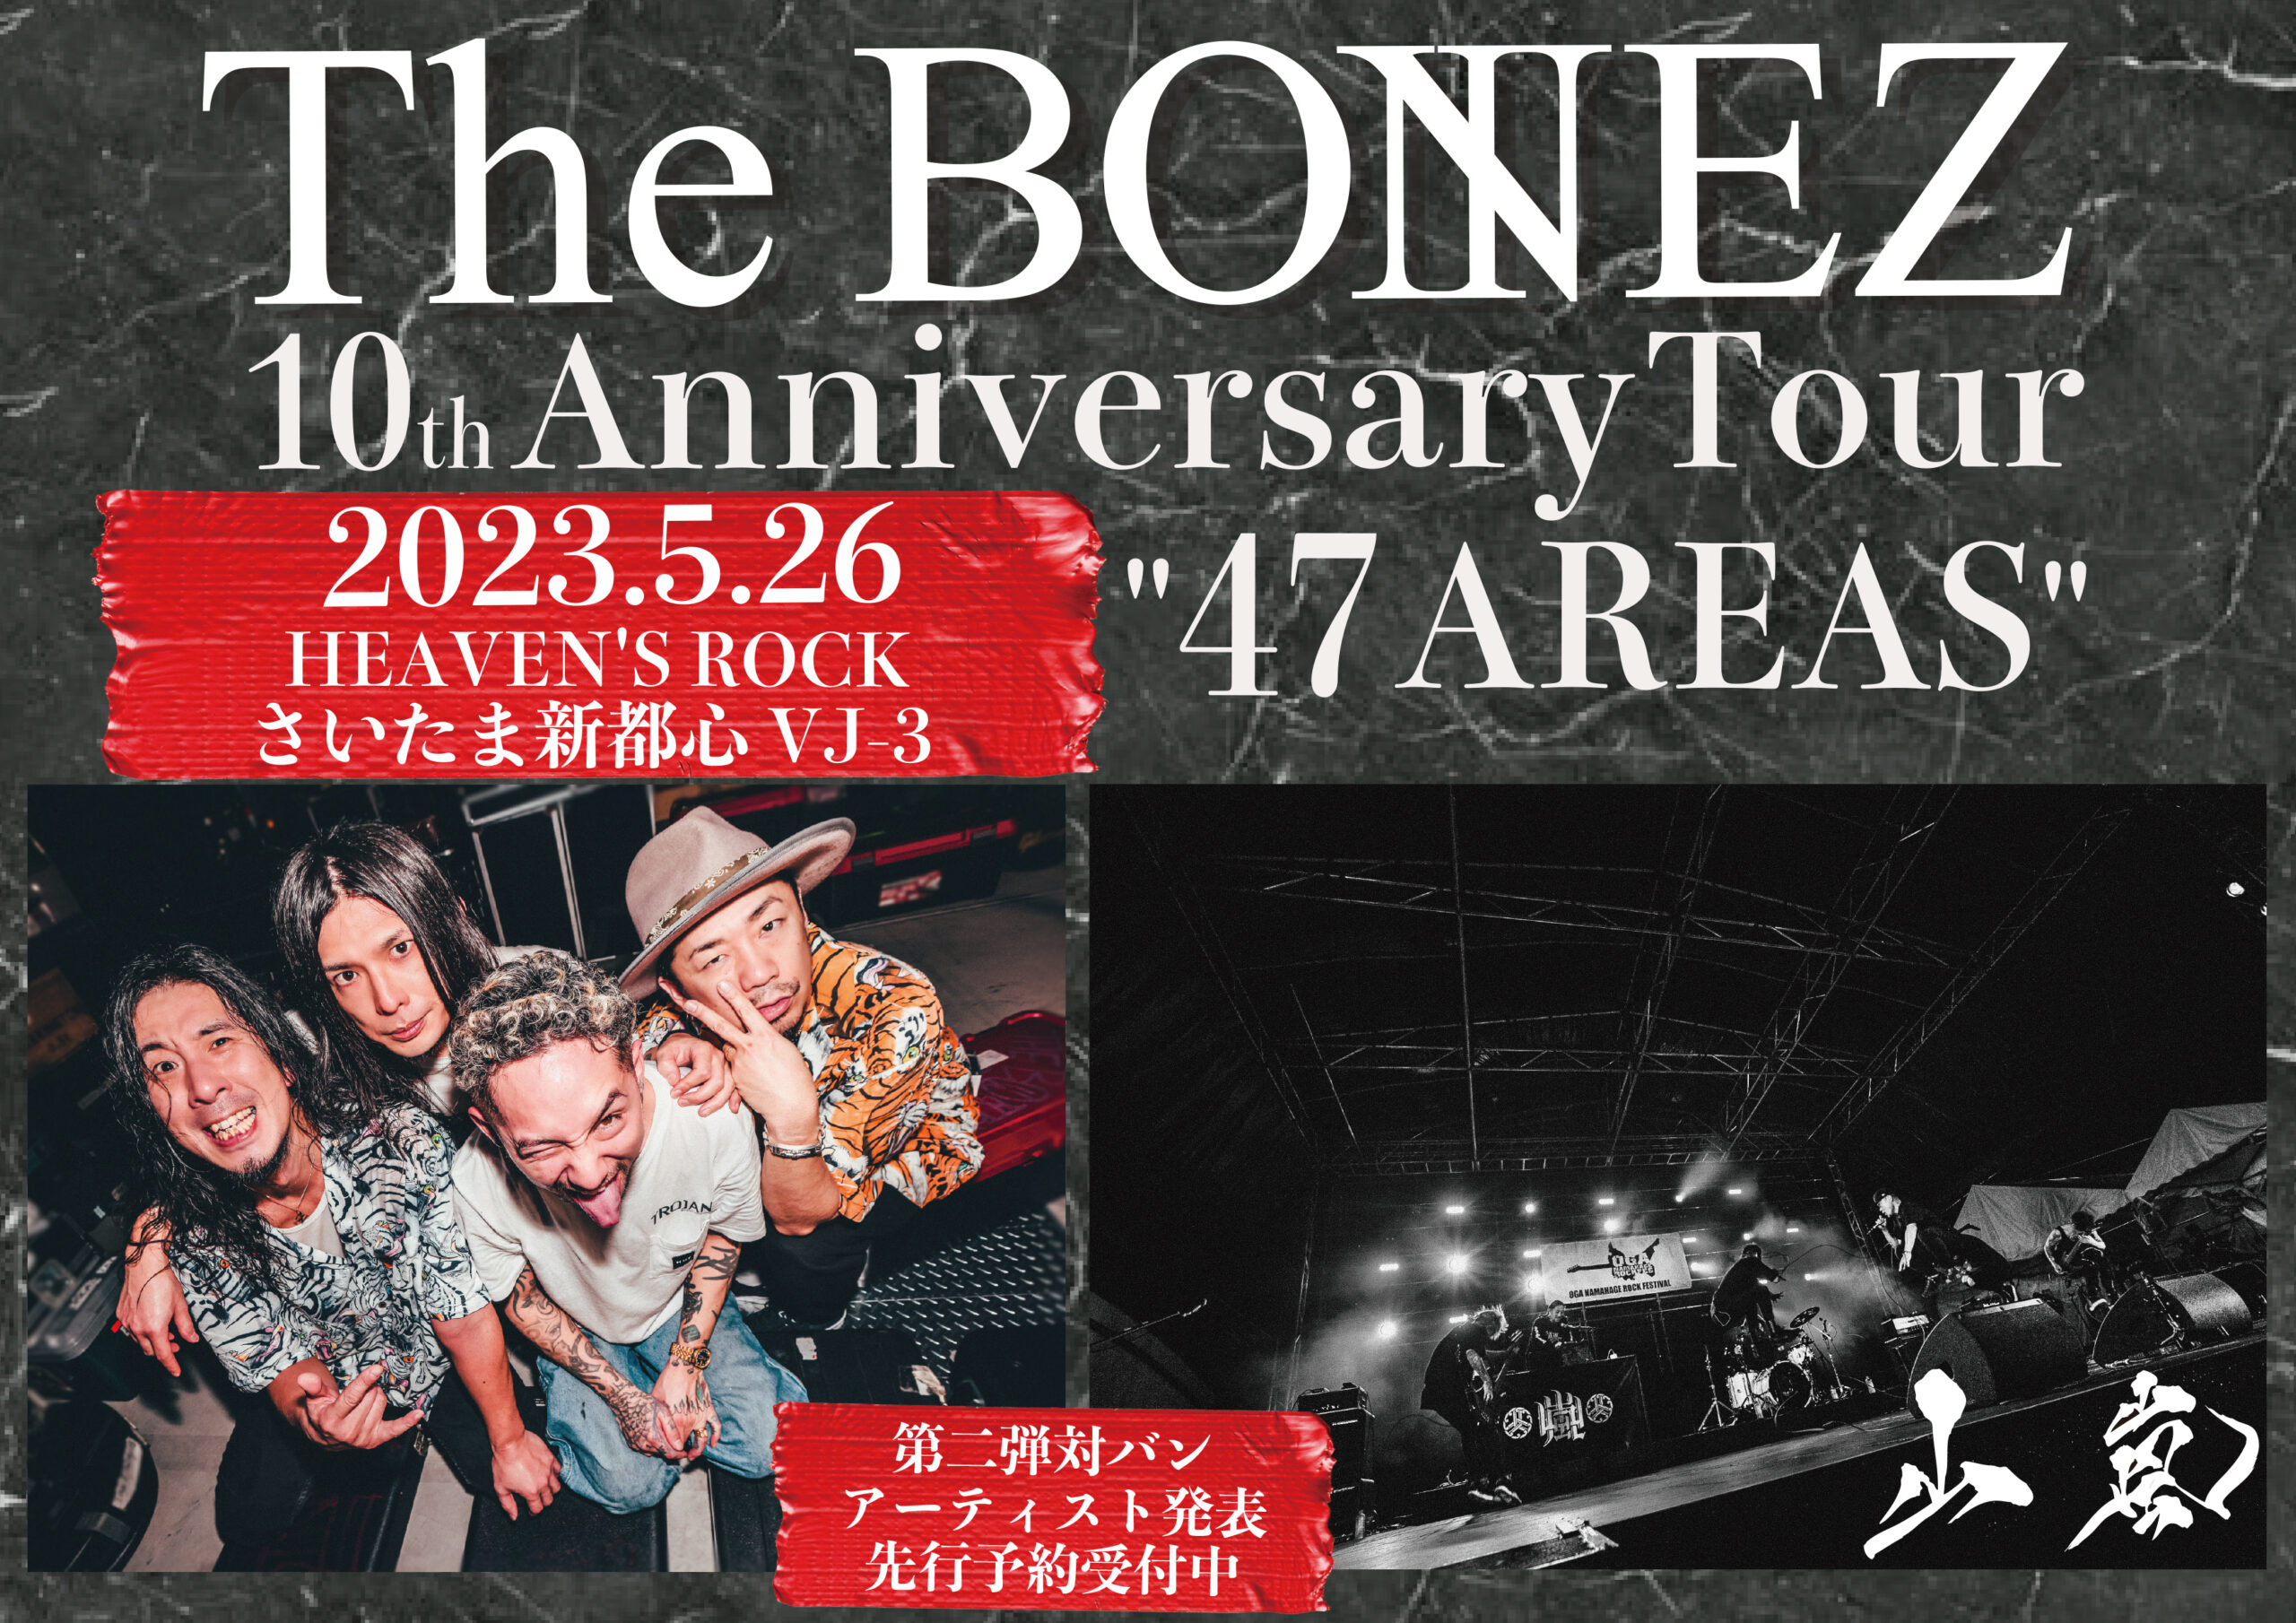 The BONEZ 10th Anniversary Tour “47 AREAS”